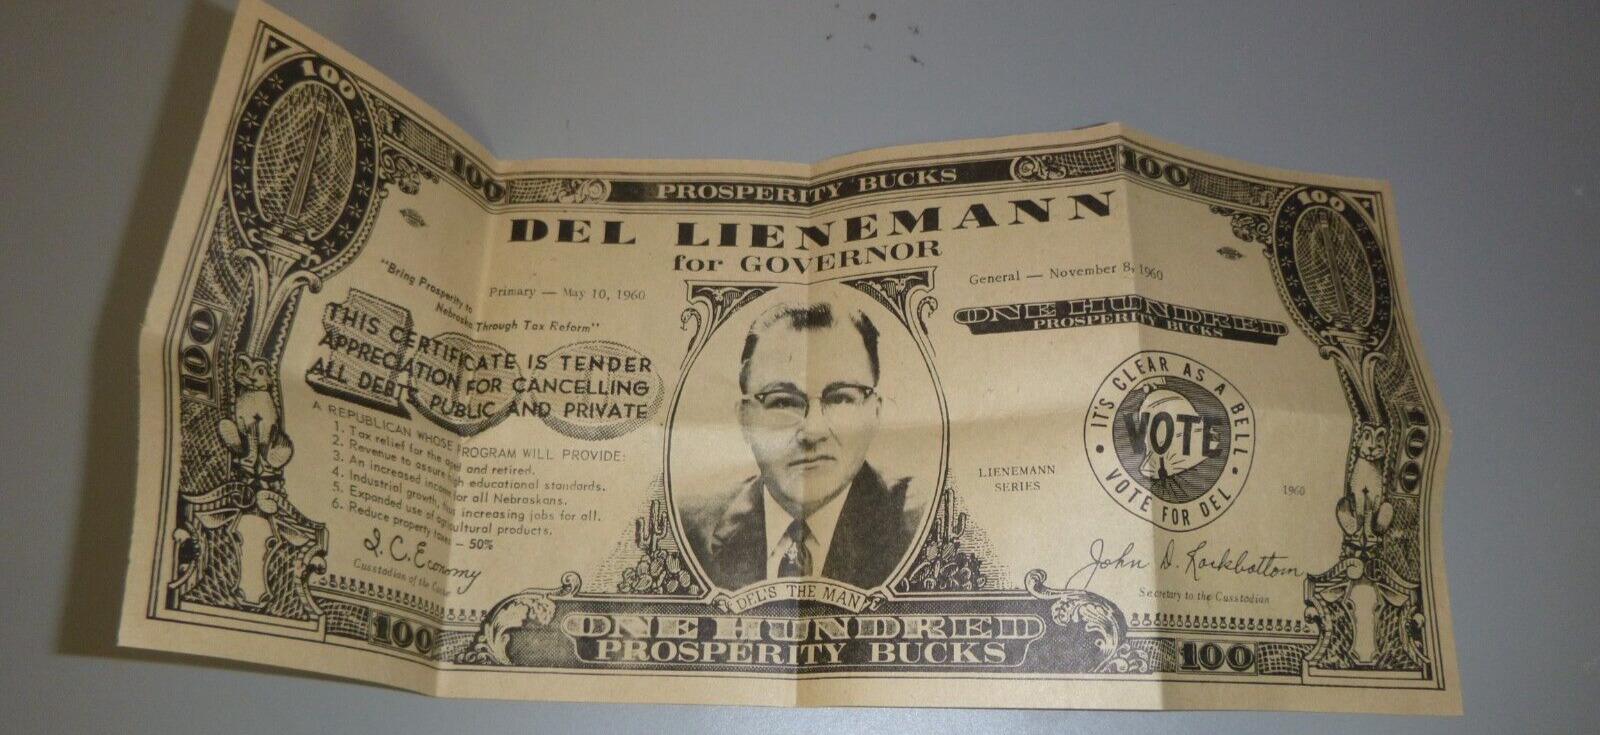 1960 Del Lienemann Republican For Governor Nebraska - Large Size Faux $100 Bill